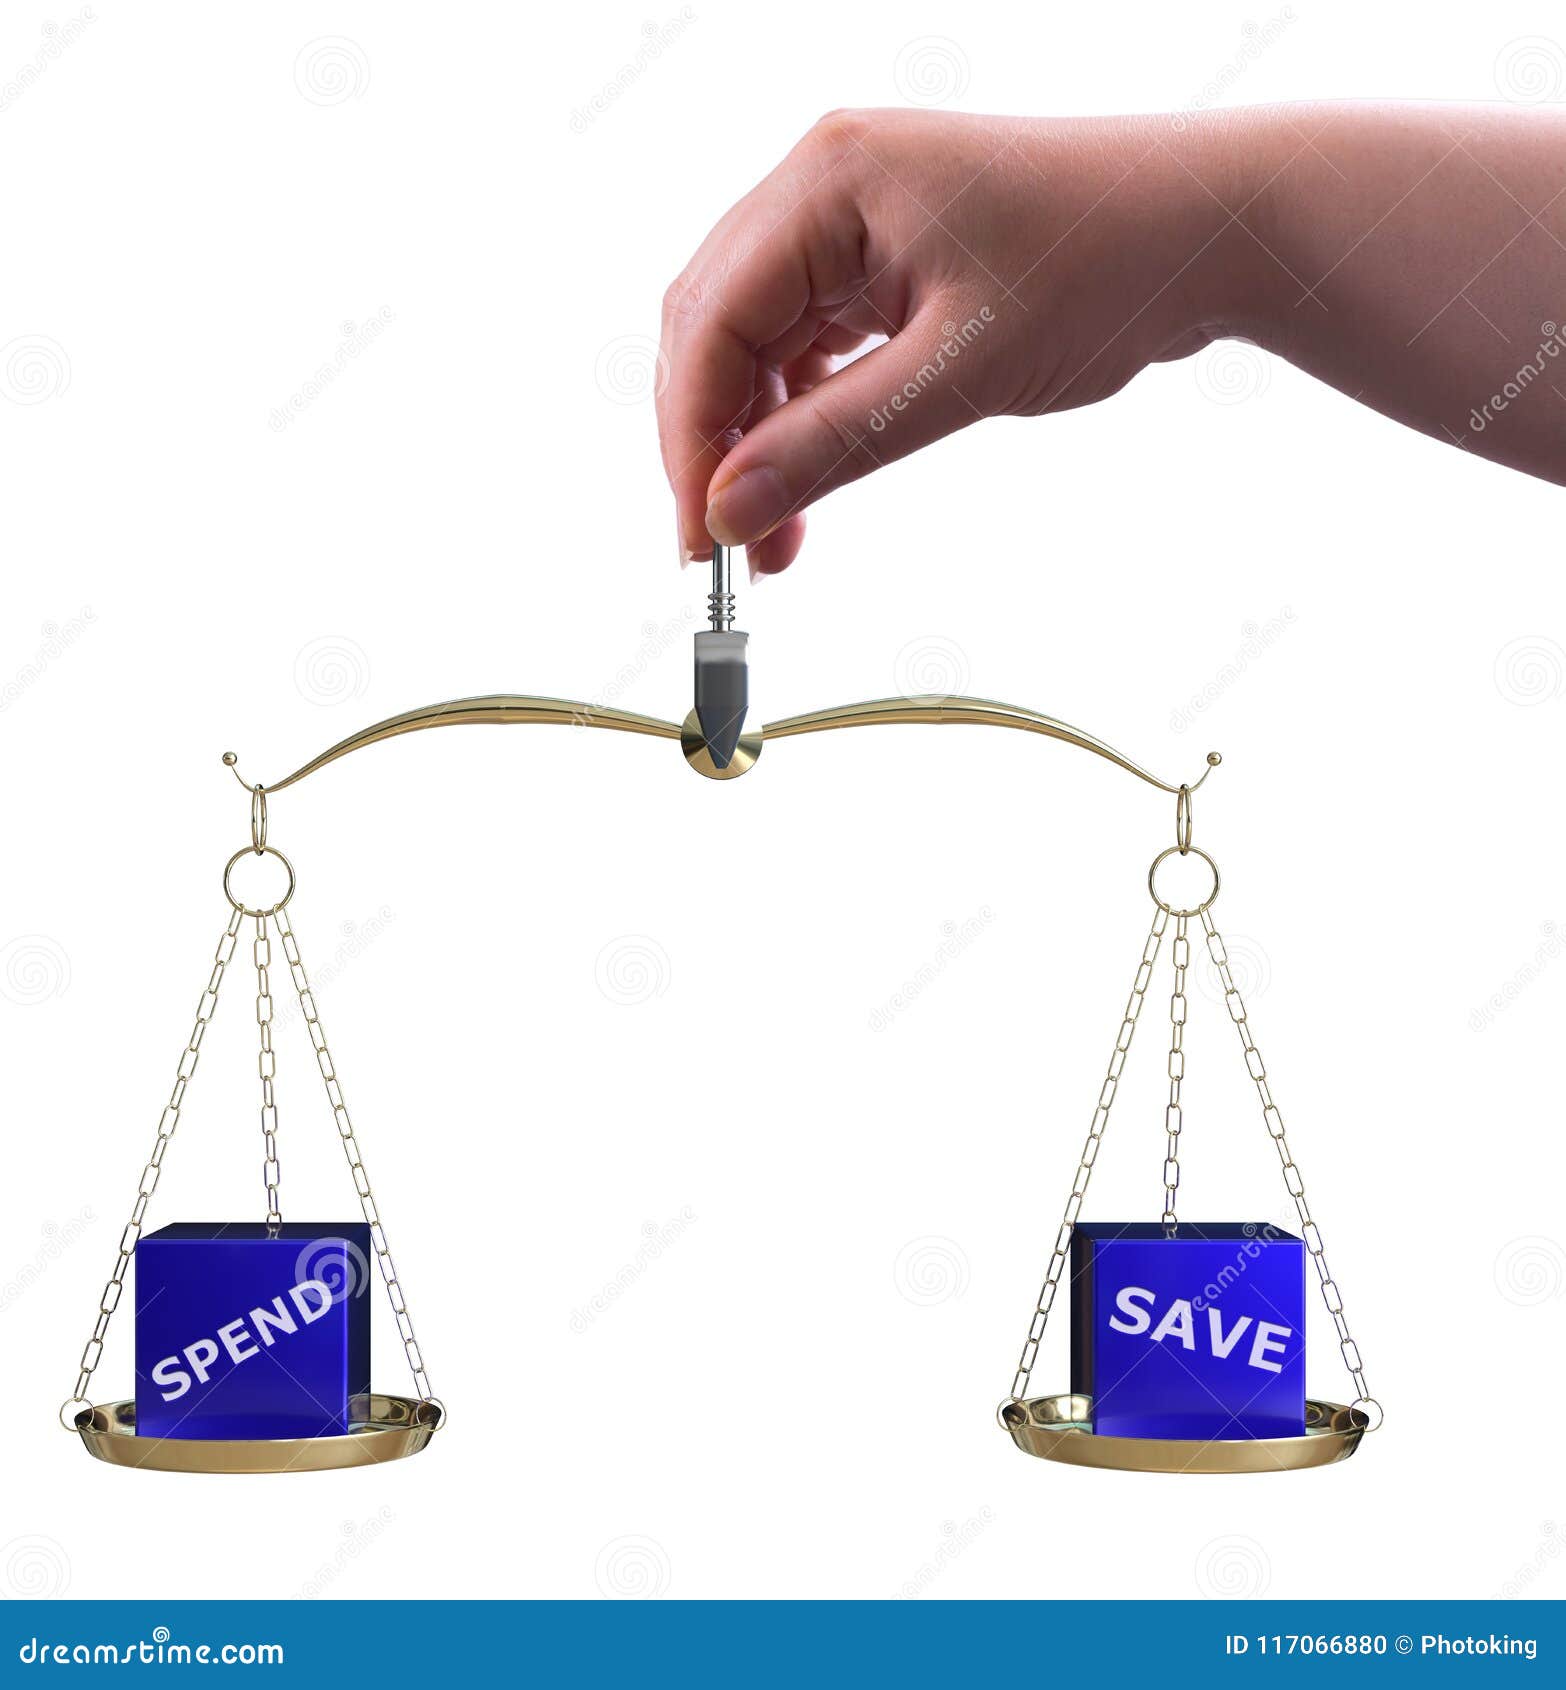 spend and save balance